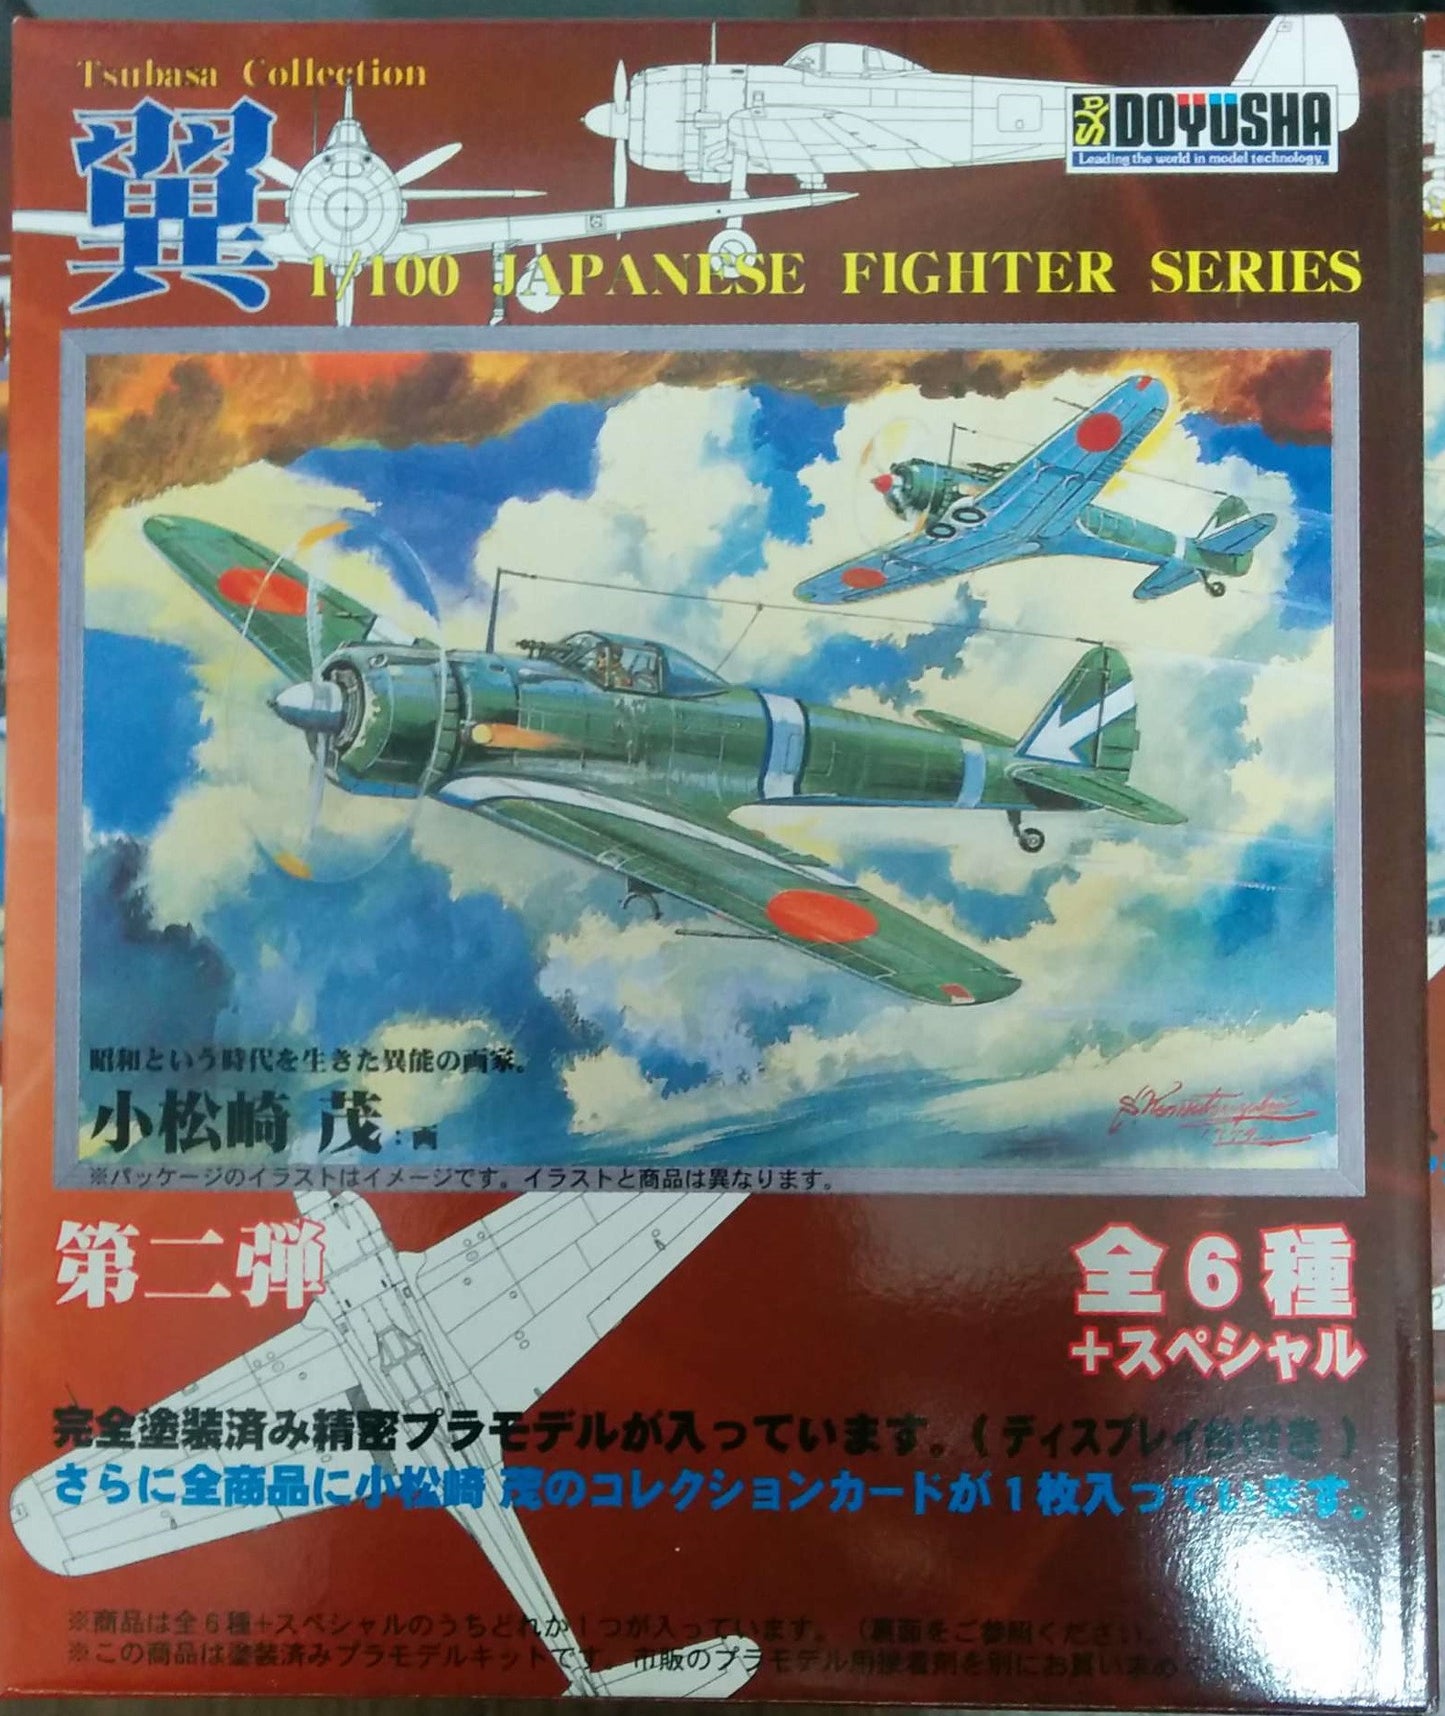 Doyusha 1/100 Tsubasa Collection Vol 2 Japanese Fighter Series 6+1 Secret 7 Model Kit Figure Set - Lavits Figure
 - 1